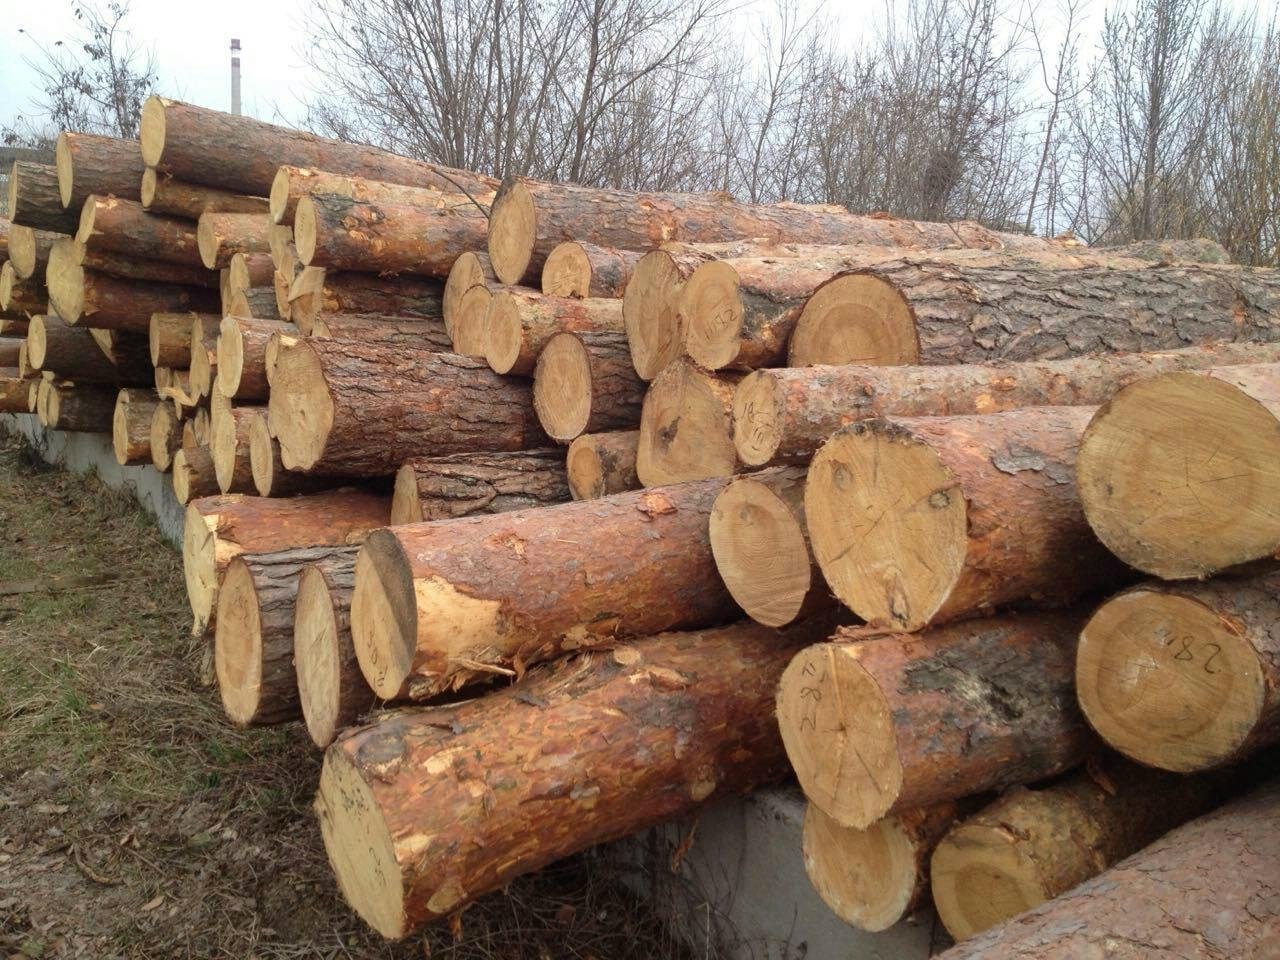 Ultra Wood Company is selling Pine logs